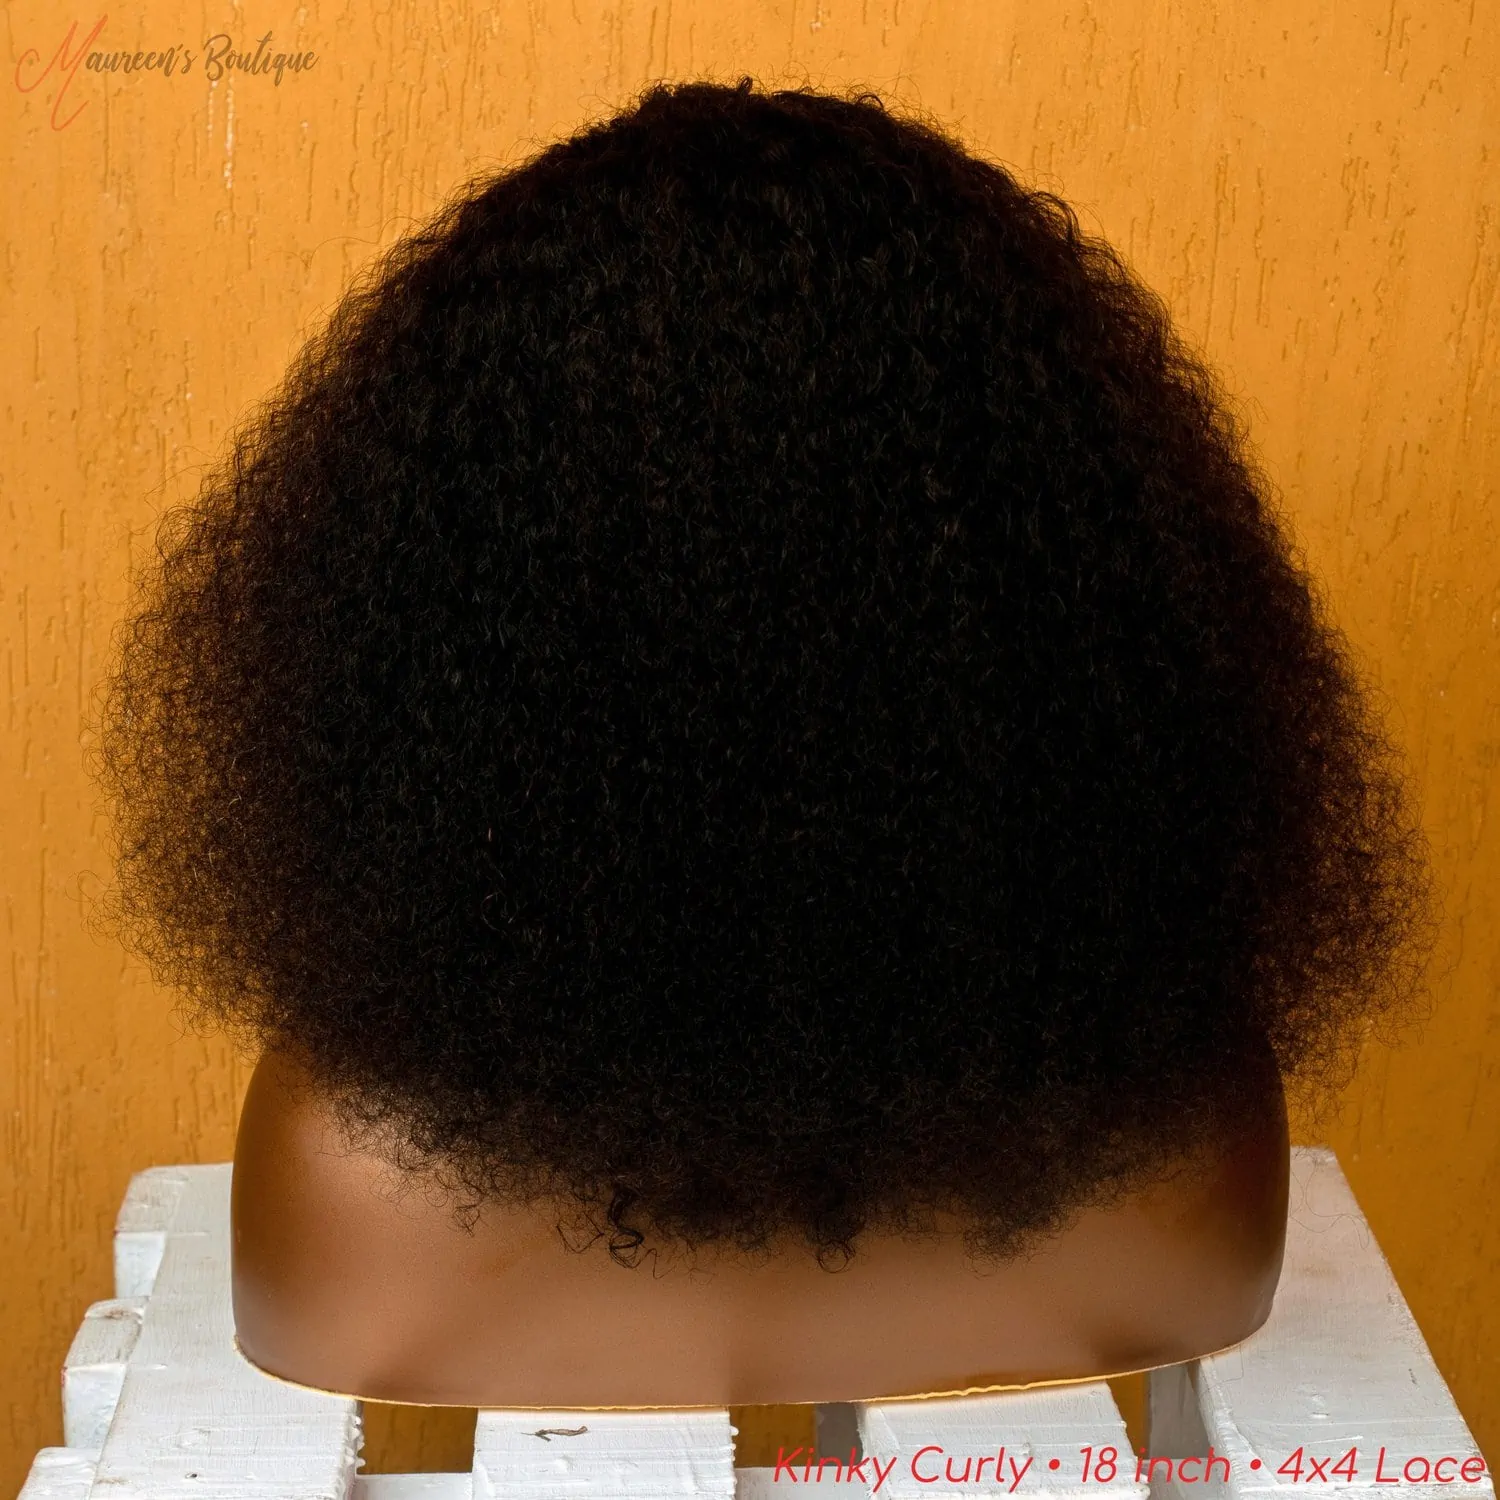 Kinky Curly 4x4 human hair wig 18 inch maureens.com 3